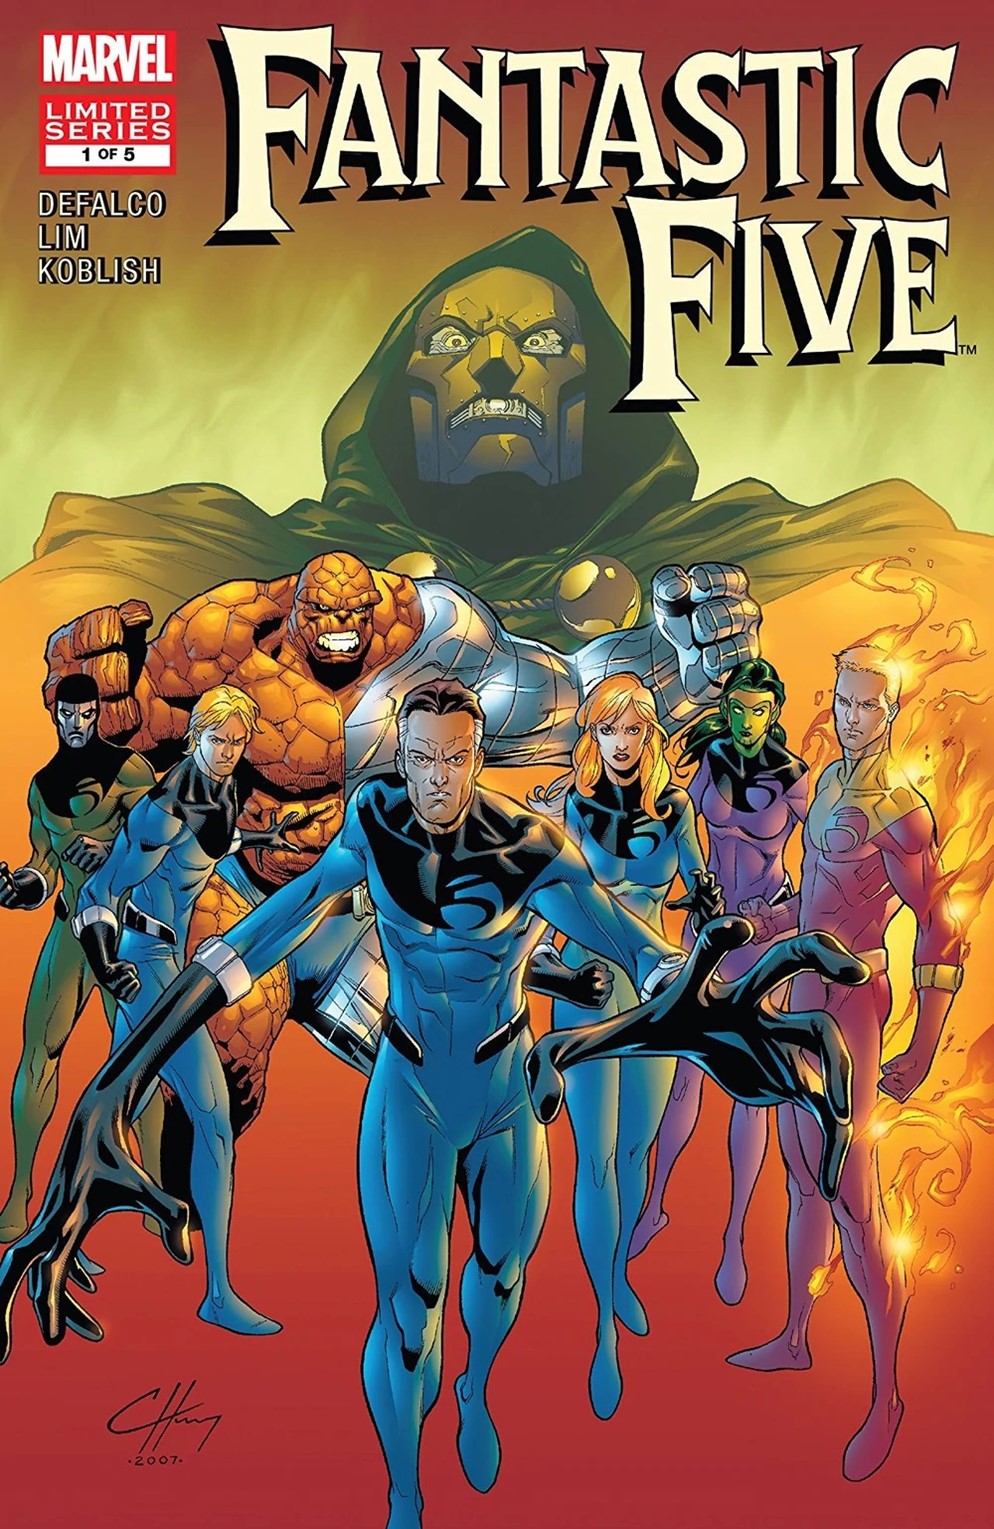 Fantastic Five Volume 2 Limited Series Bundle Issues 1-5